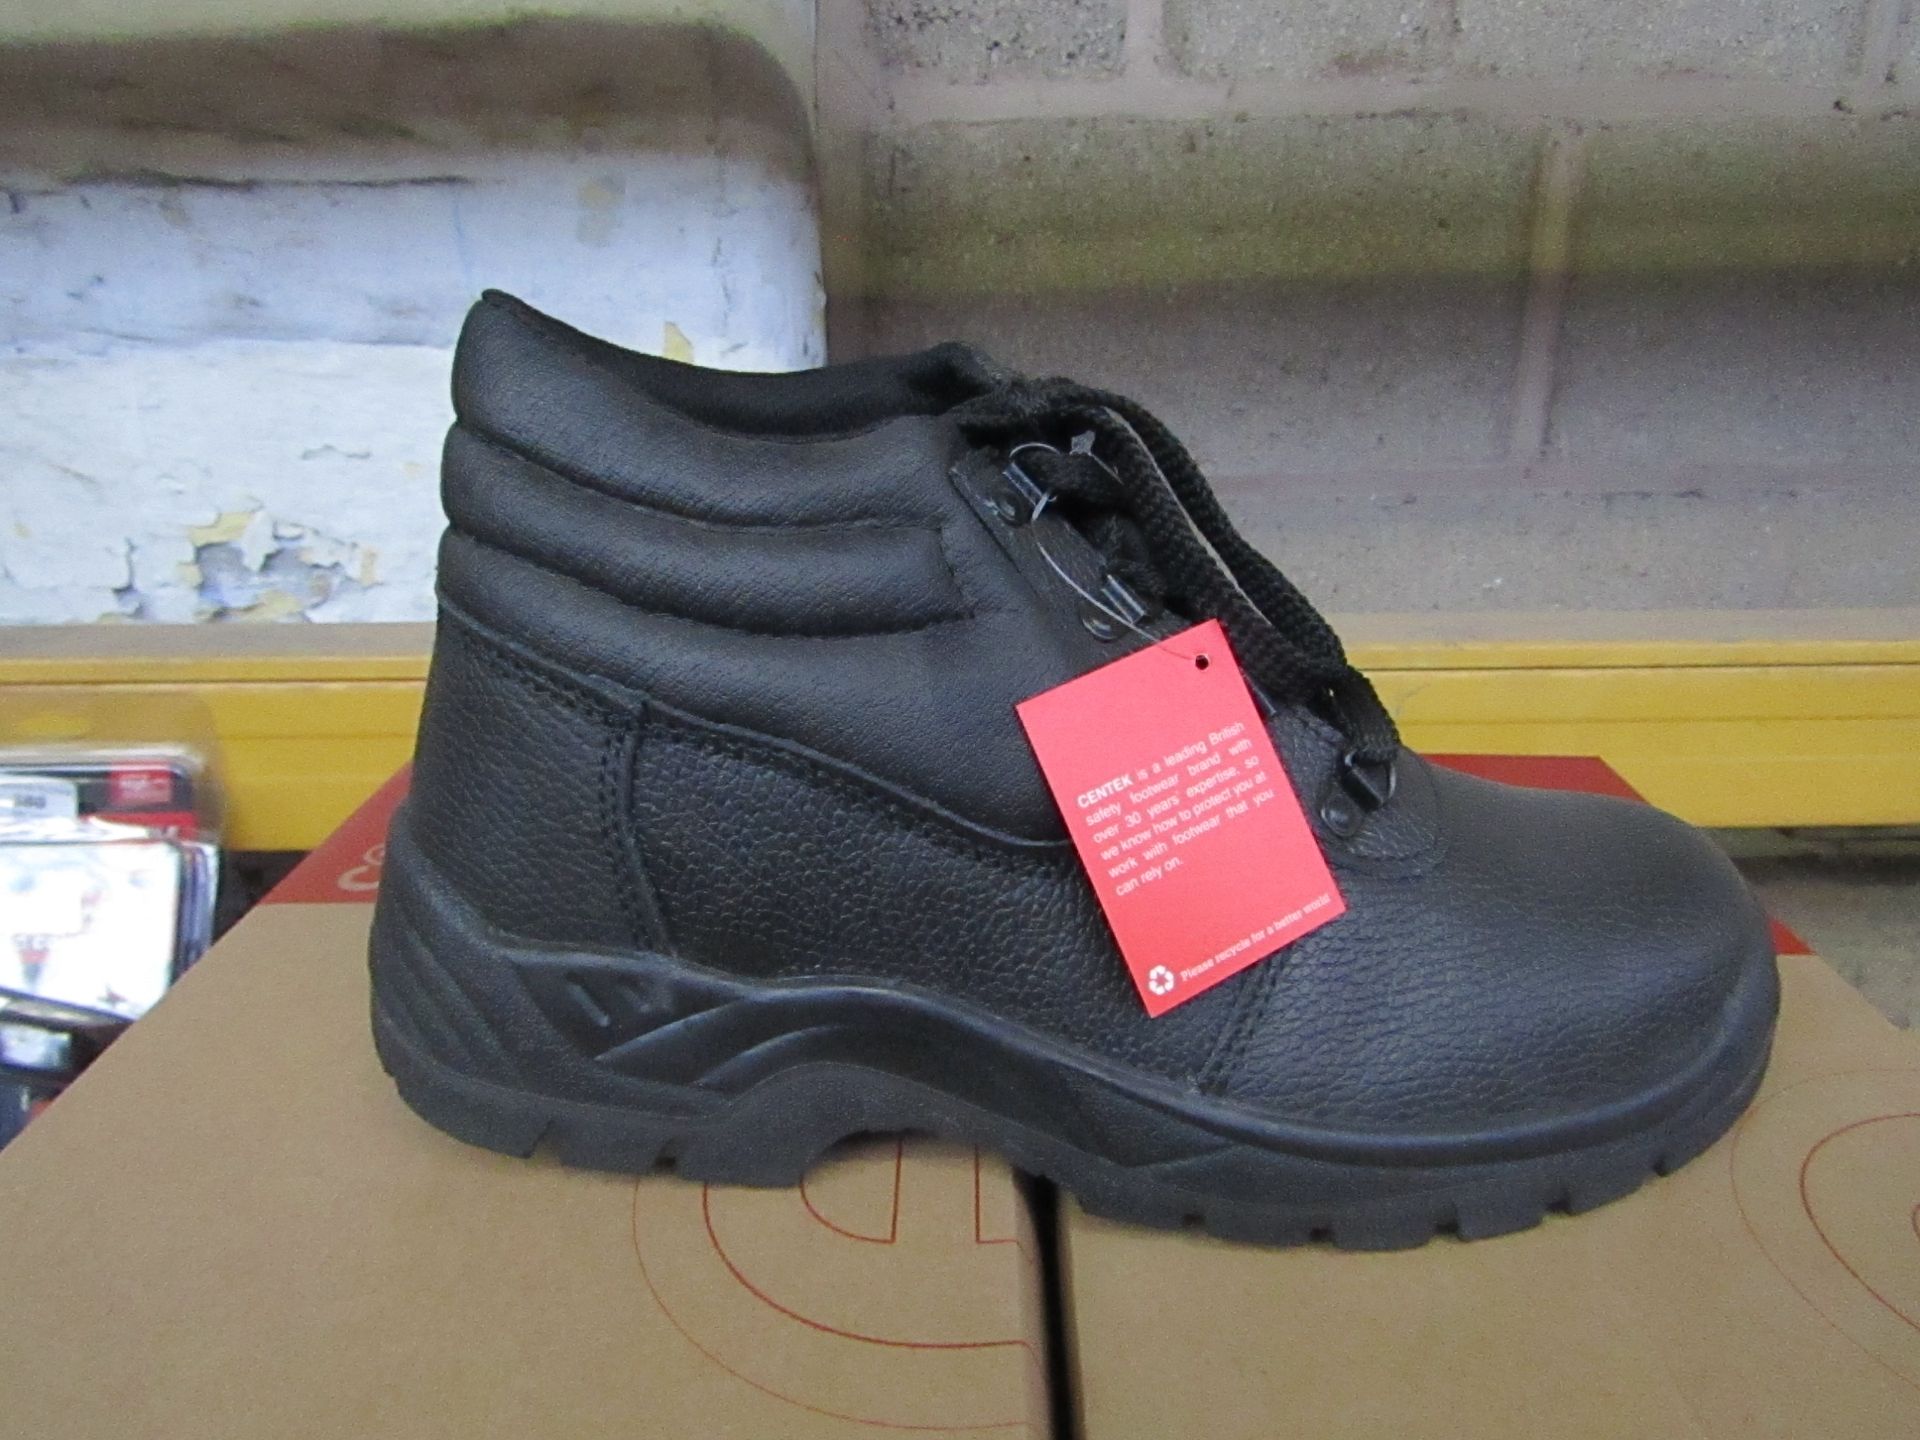 Centek - Black Steel Toe Cap Boot - Size 9 - New & Boxed.